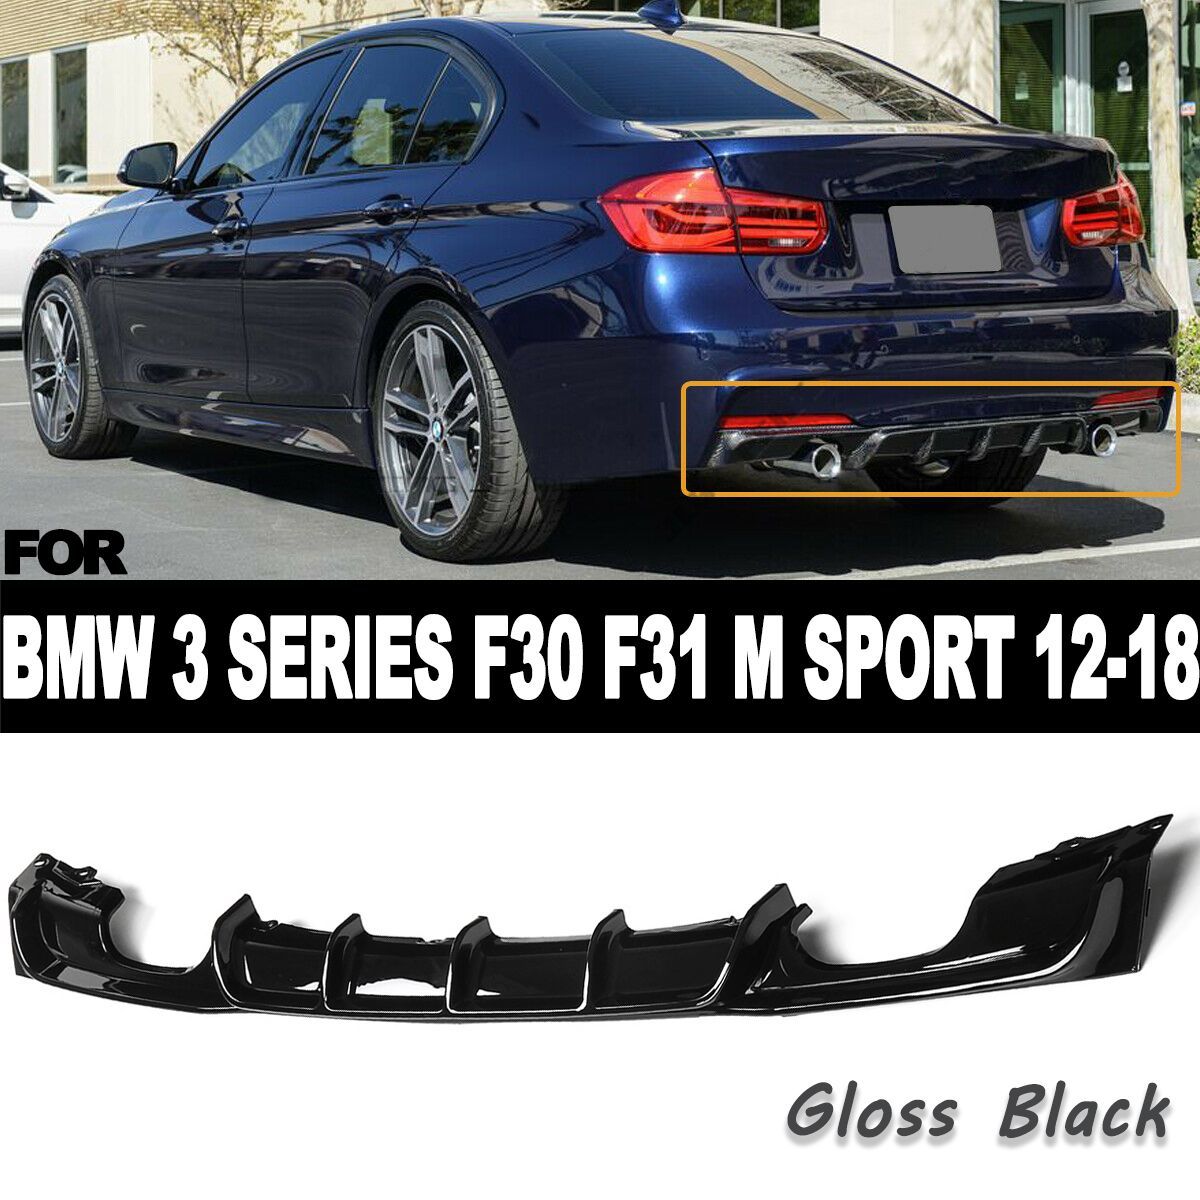 Rear-Bumper-Diffuser-Gloss-Black-For-BMW-3-Series-F30-F31-M-Sport-2012-2018-1688693